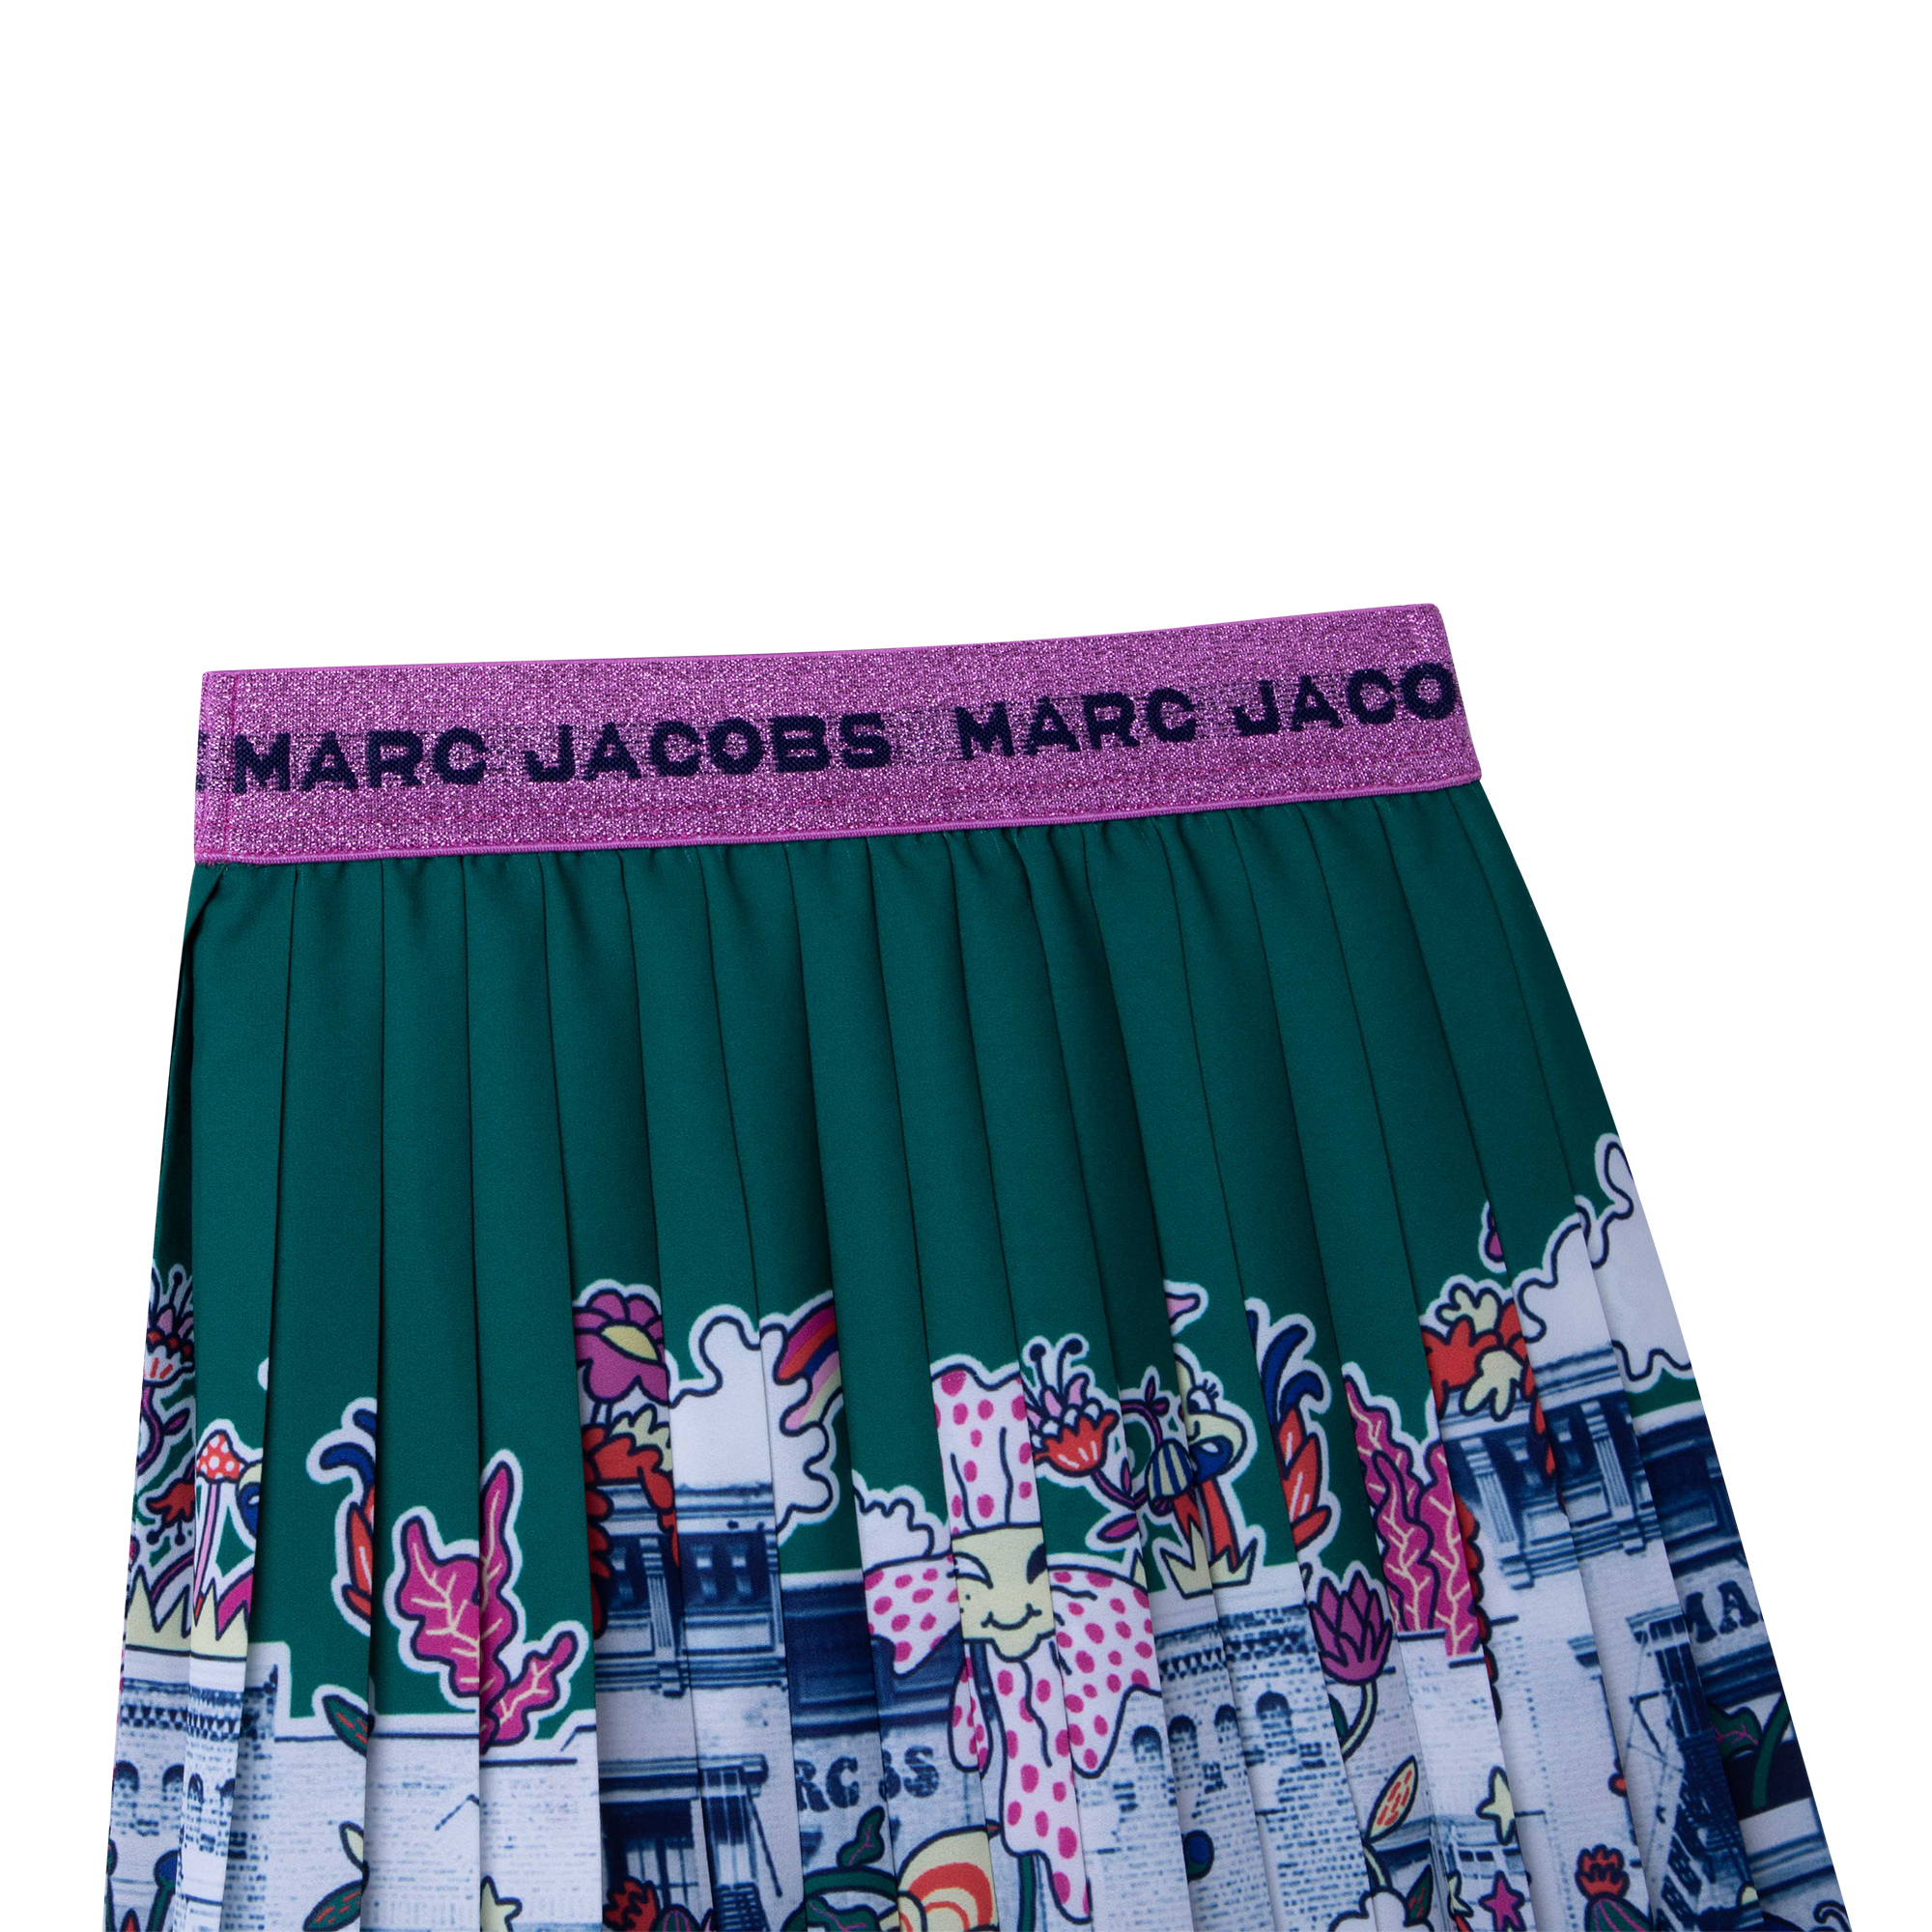 Cosmic City Print Pleated Skirt MARC JACOBS for GIRL